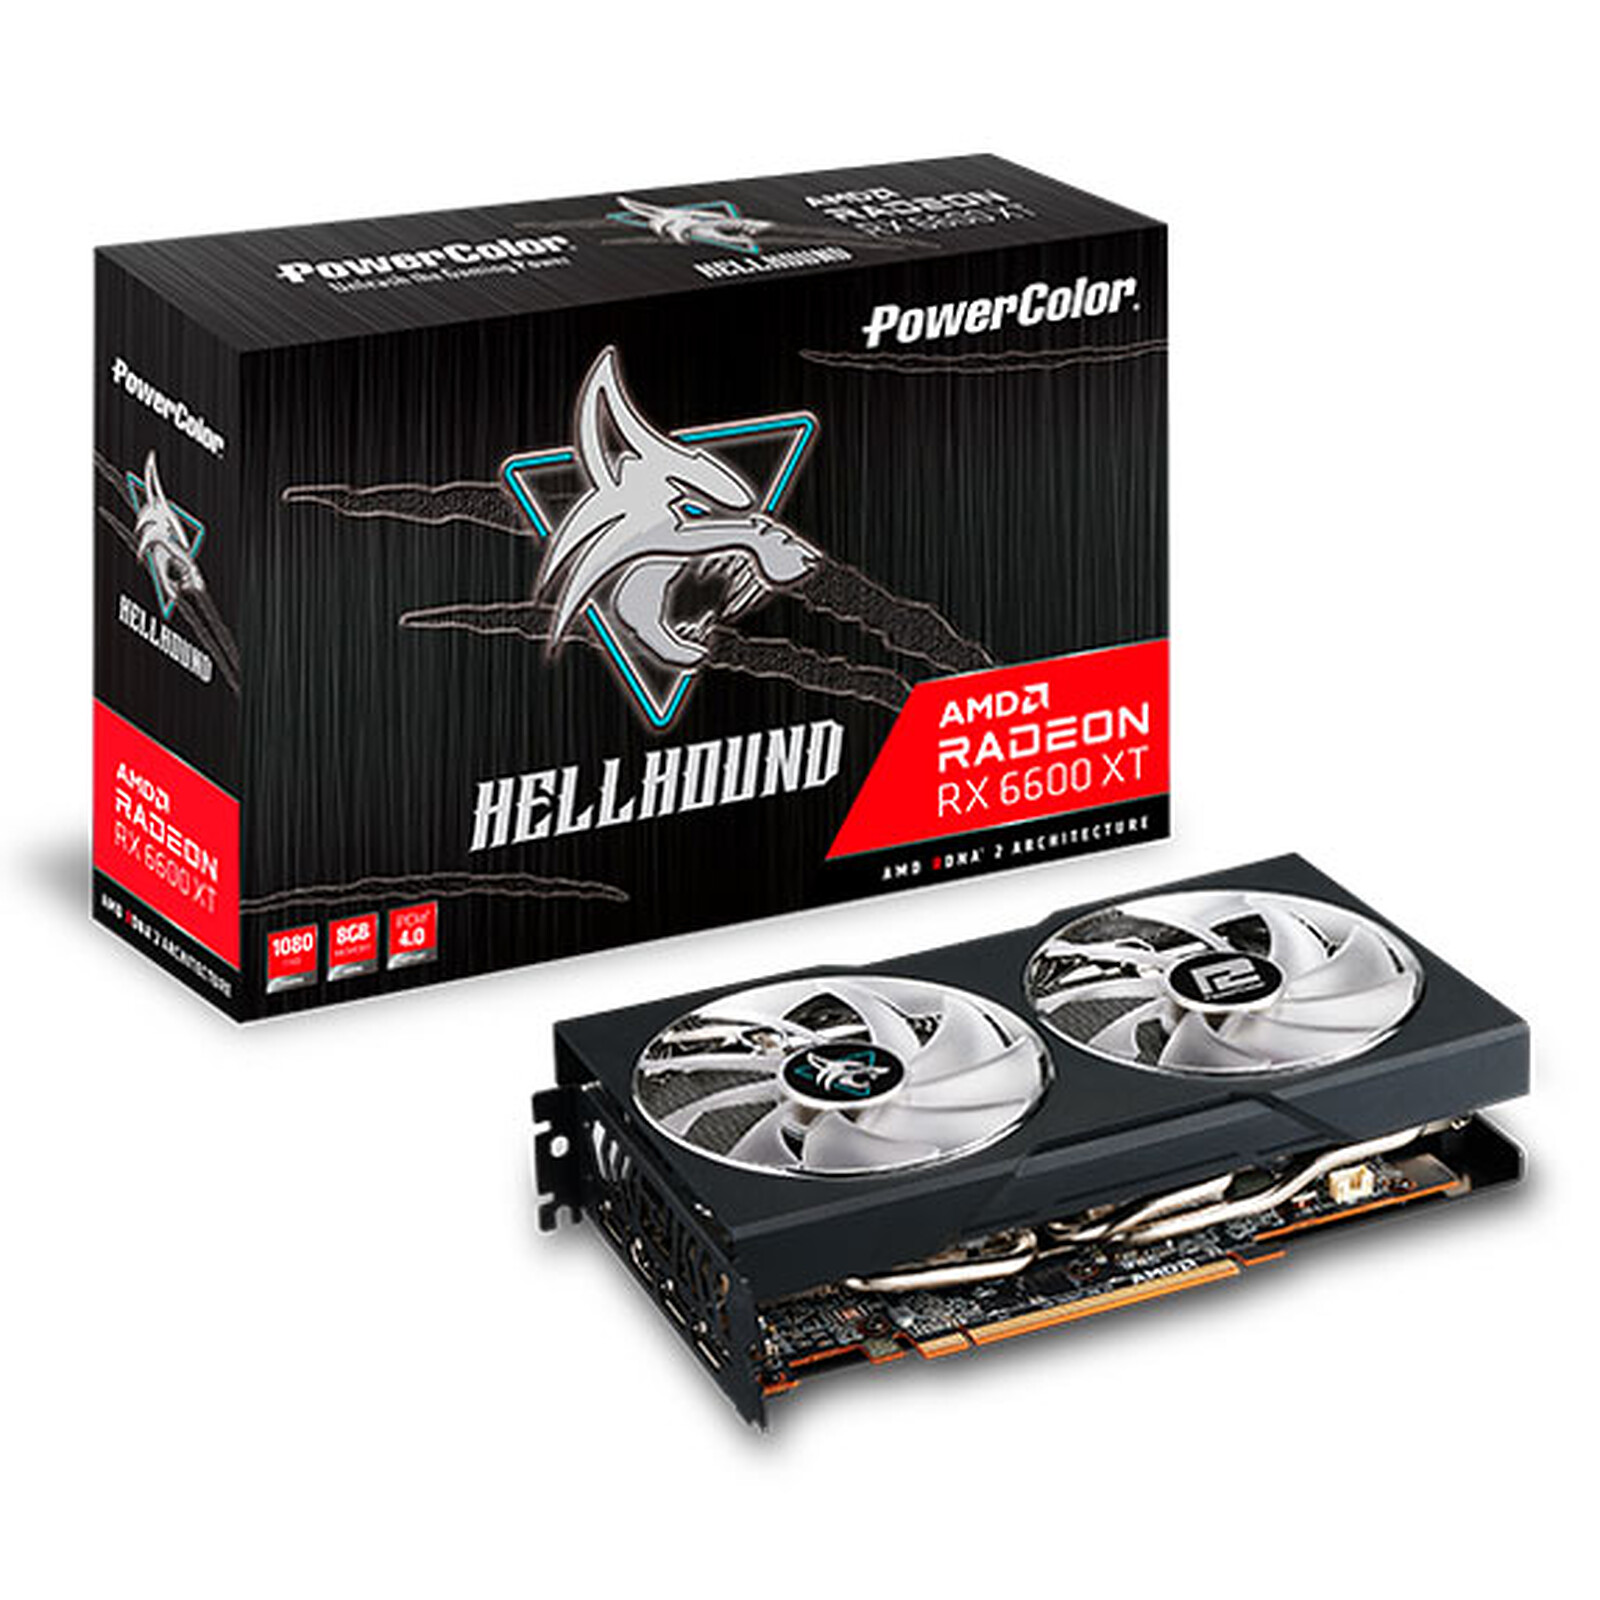 PowerColor Hellhound AMD Radeon RX 6600 XT 8GB GDDR6 - Scheda video